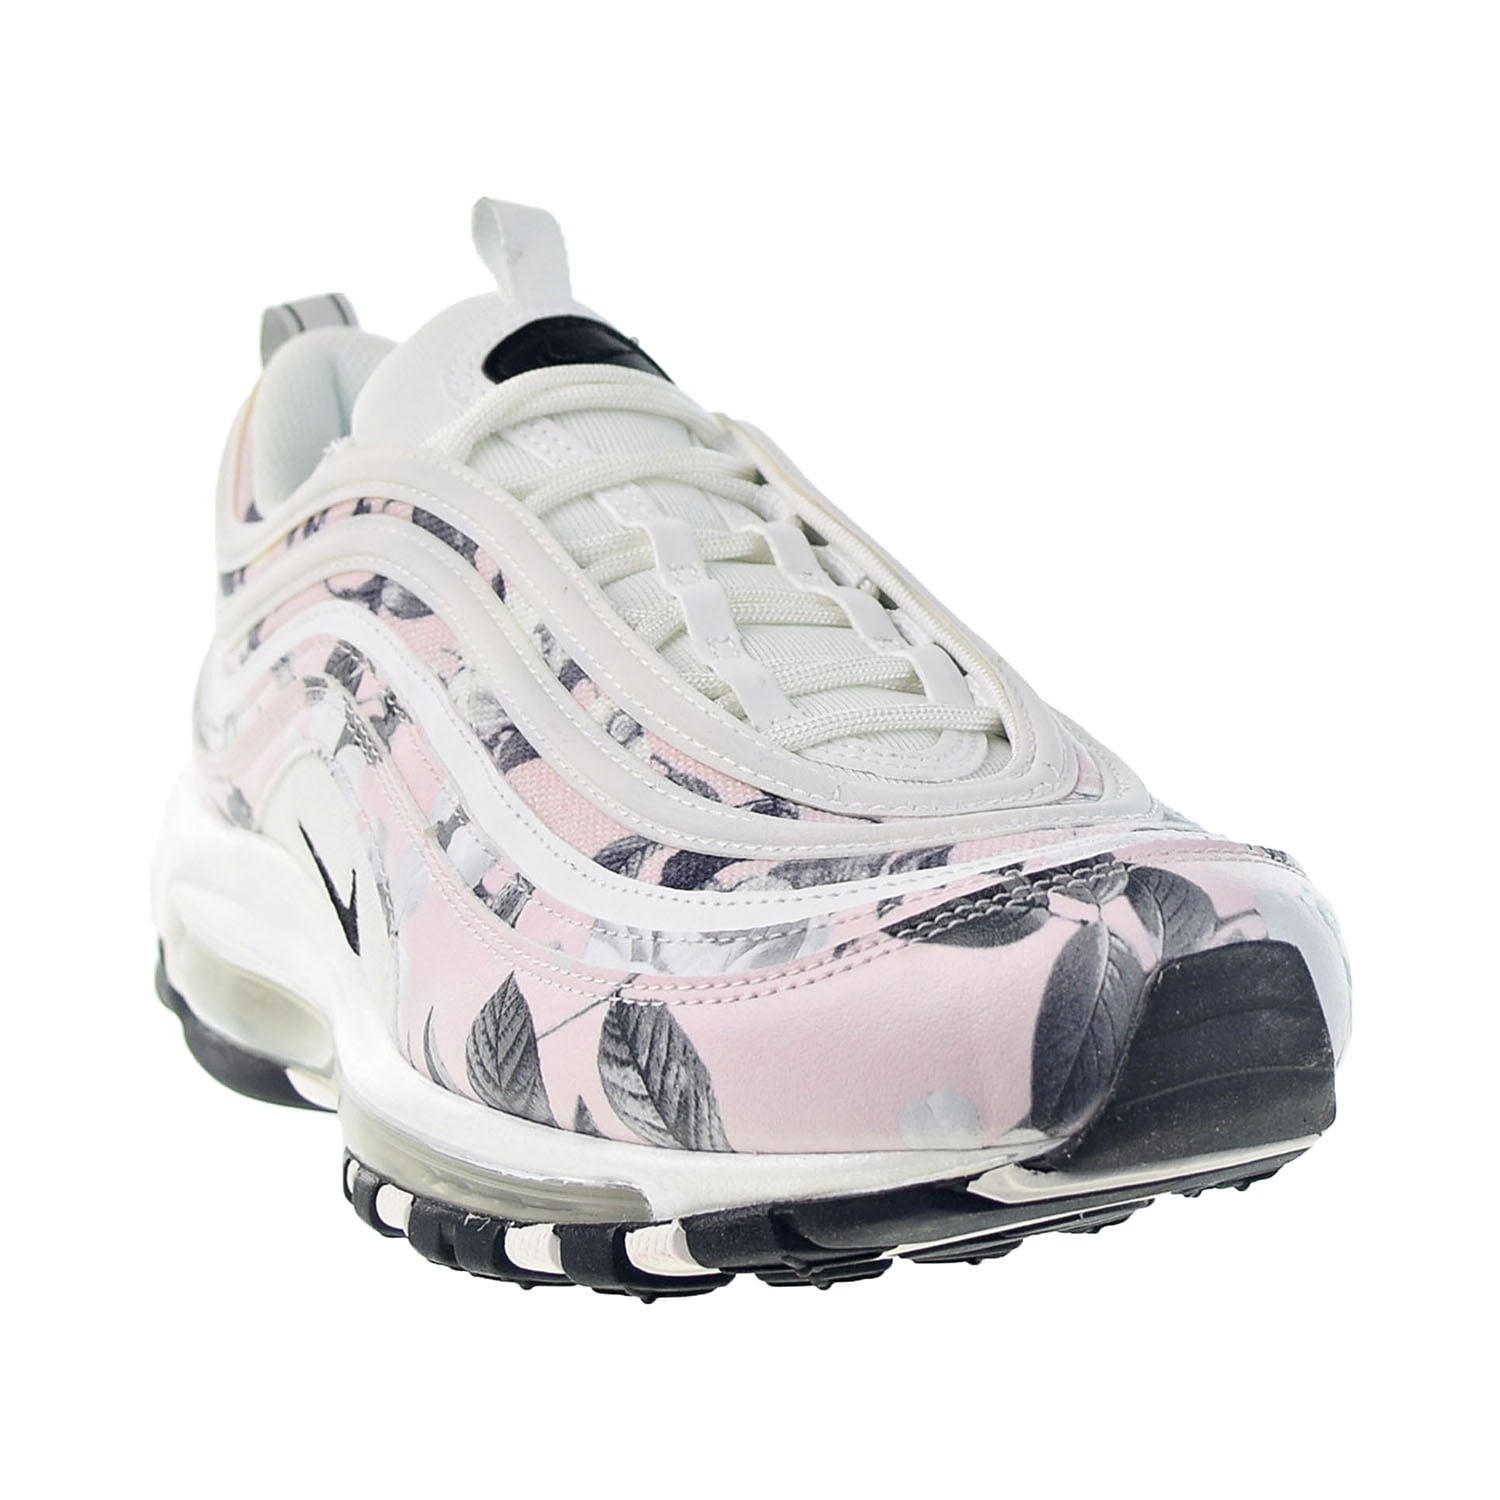 enviar solapa Tectónico Nike Air Max 97 "Floral" Women's Shoes Pale Pink-Black-White bv6119-600 -  Walmart.com